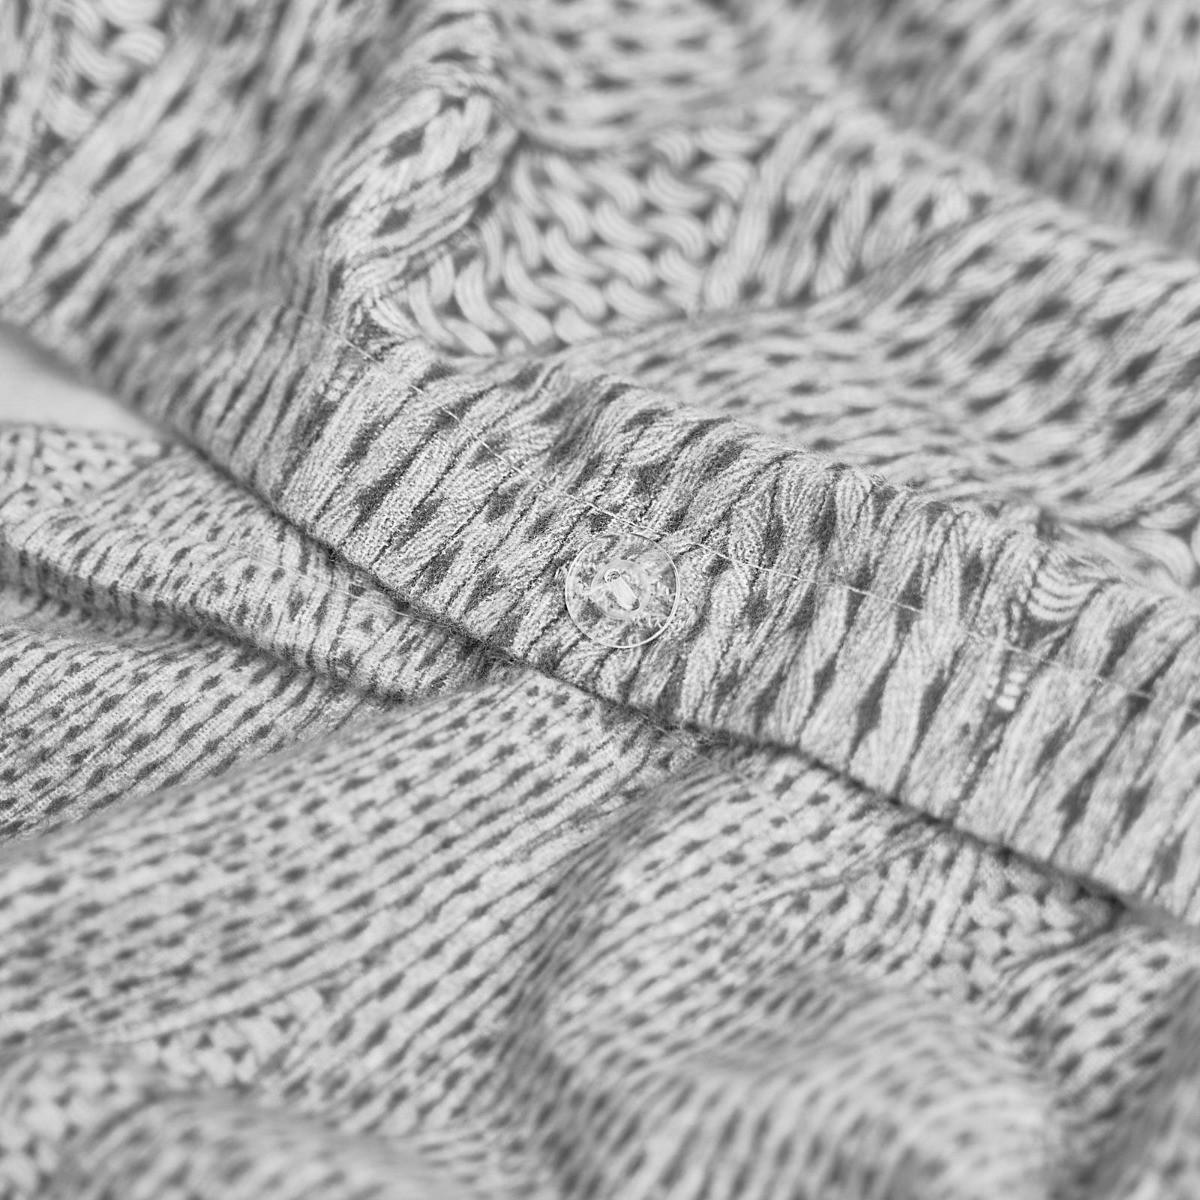 Dreamscene Chunky Knit Print Brushed Cotton Duvet Set, Grey - Double>